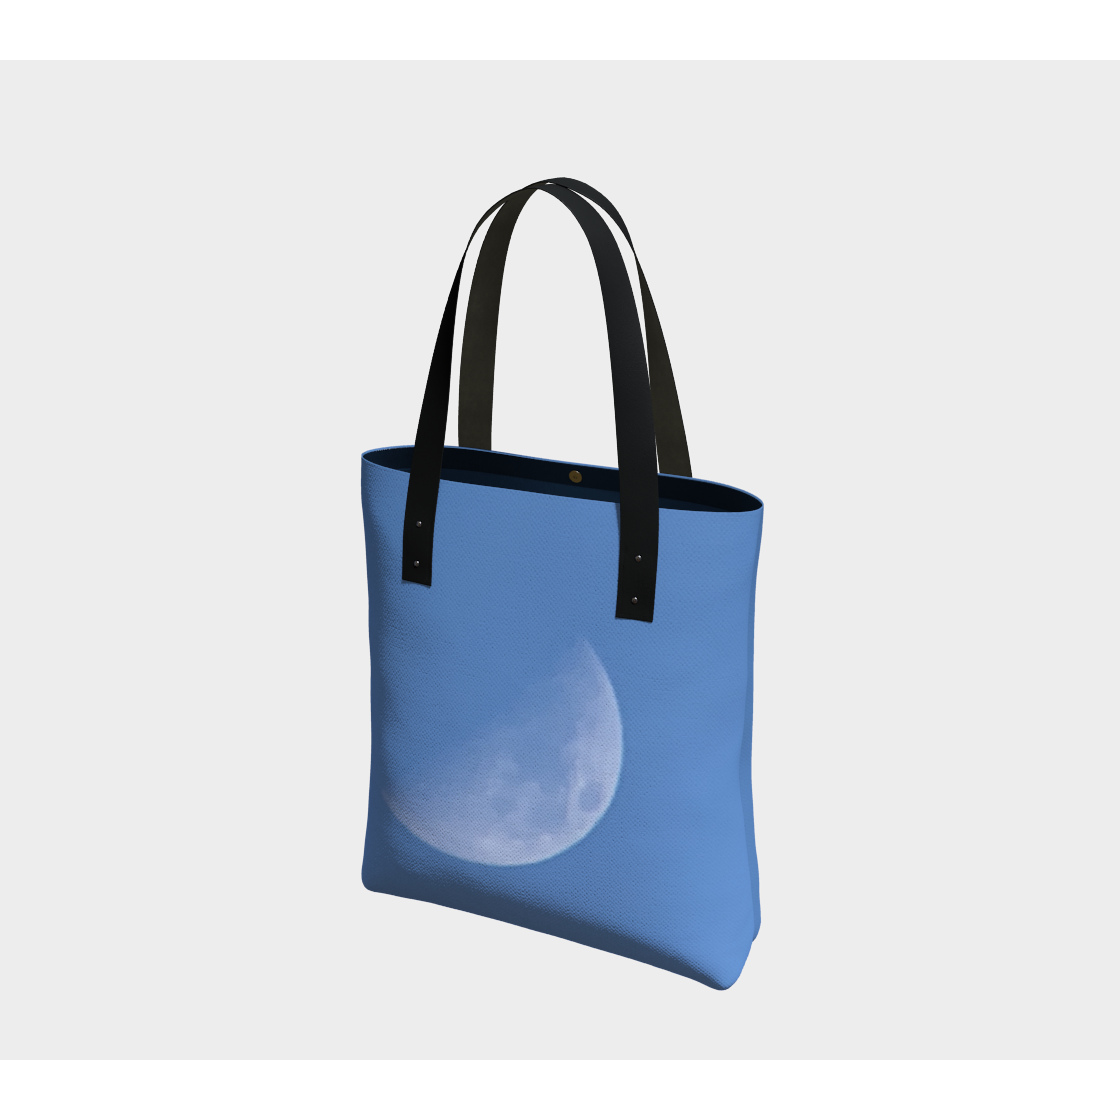 Tote Bag for Women with: Half Moon Design, Dark Inside